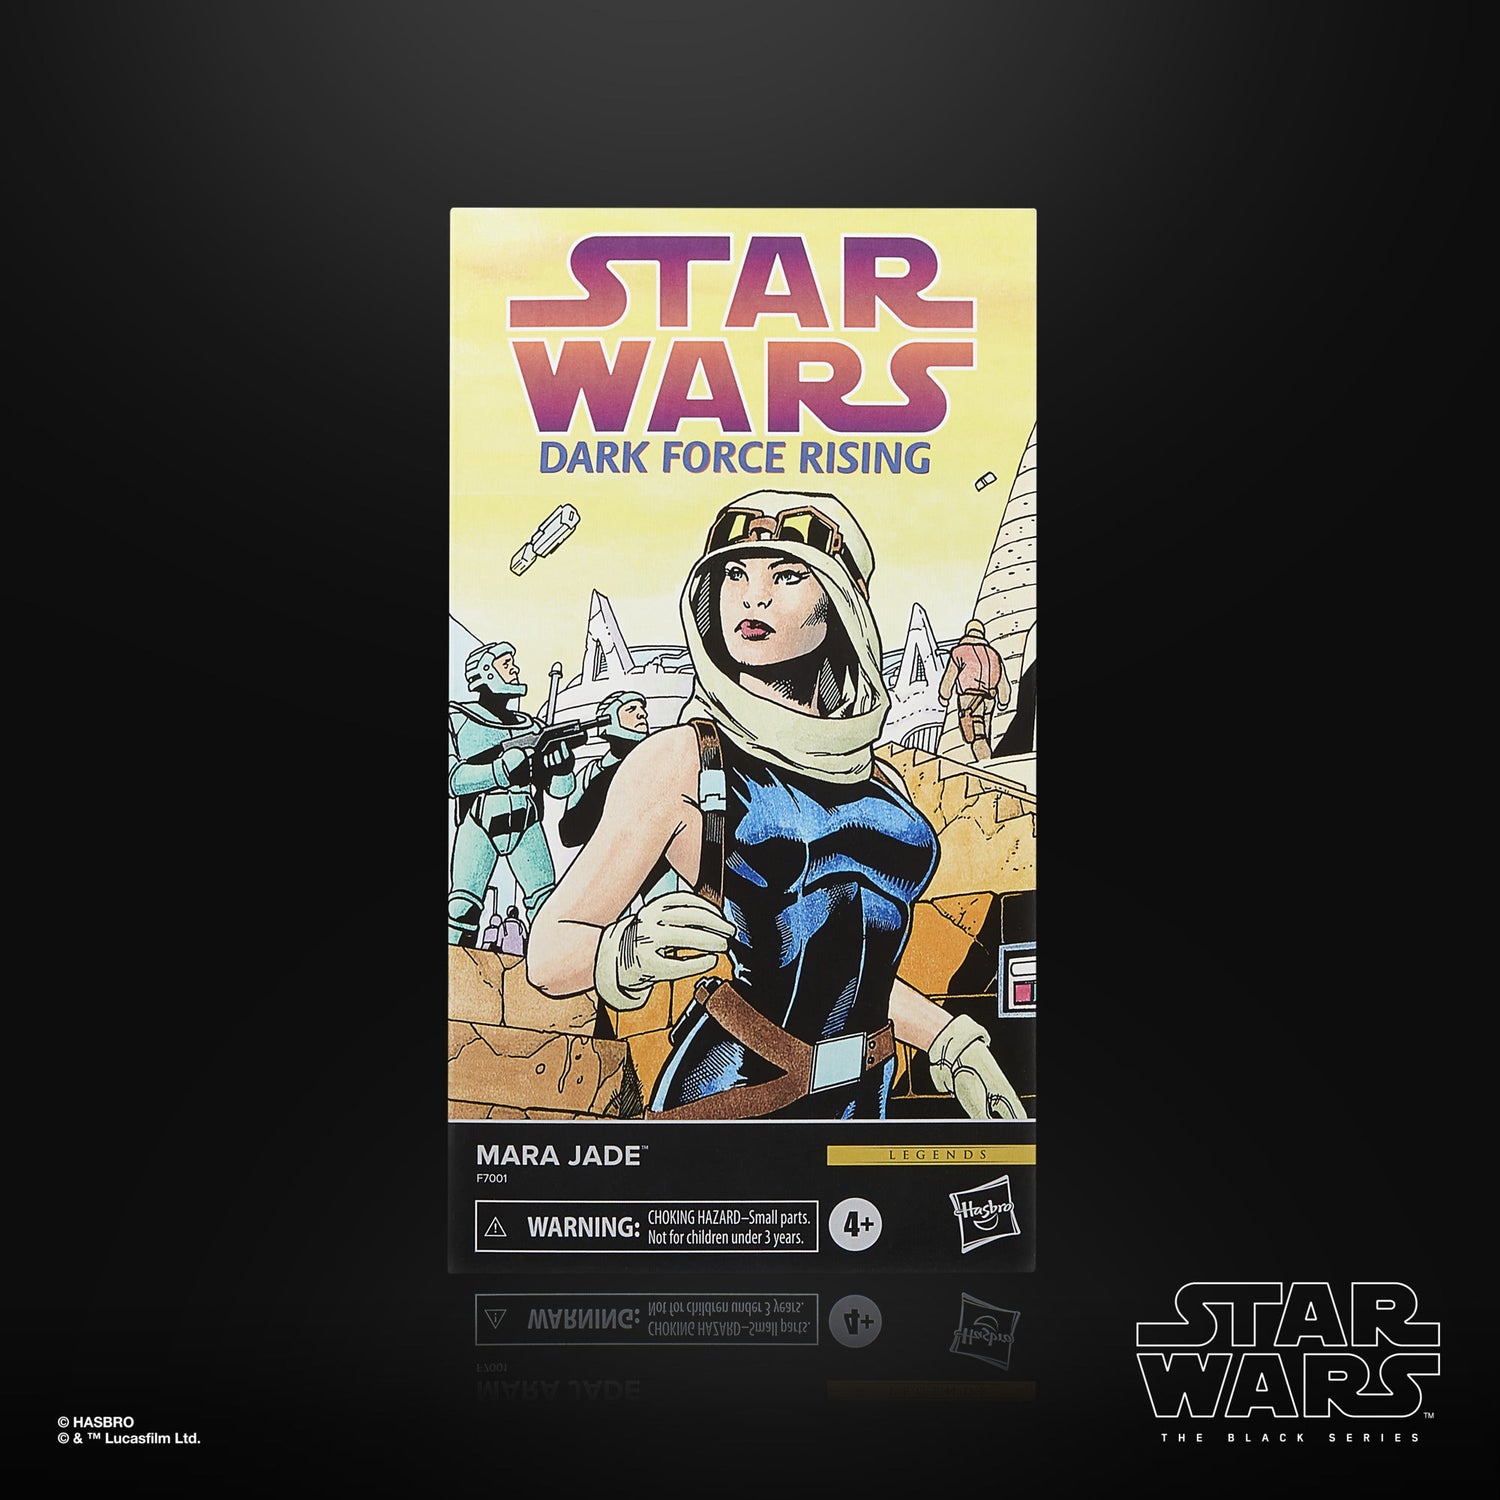 Star Wars: The Black Series Mara Jade Hasbro